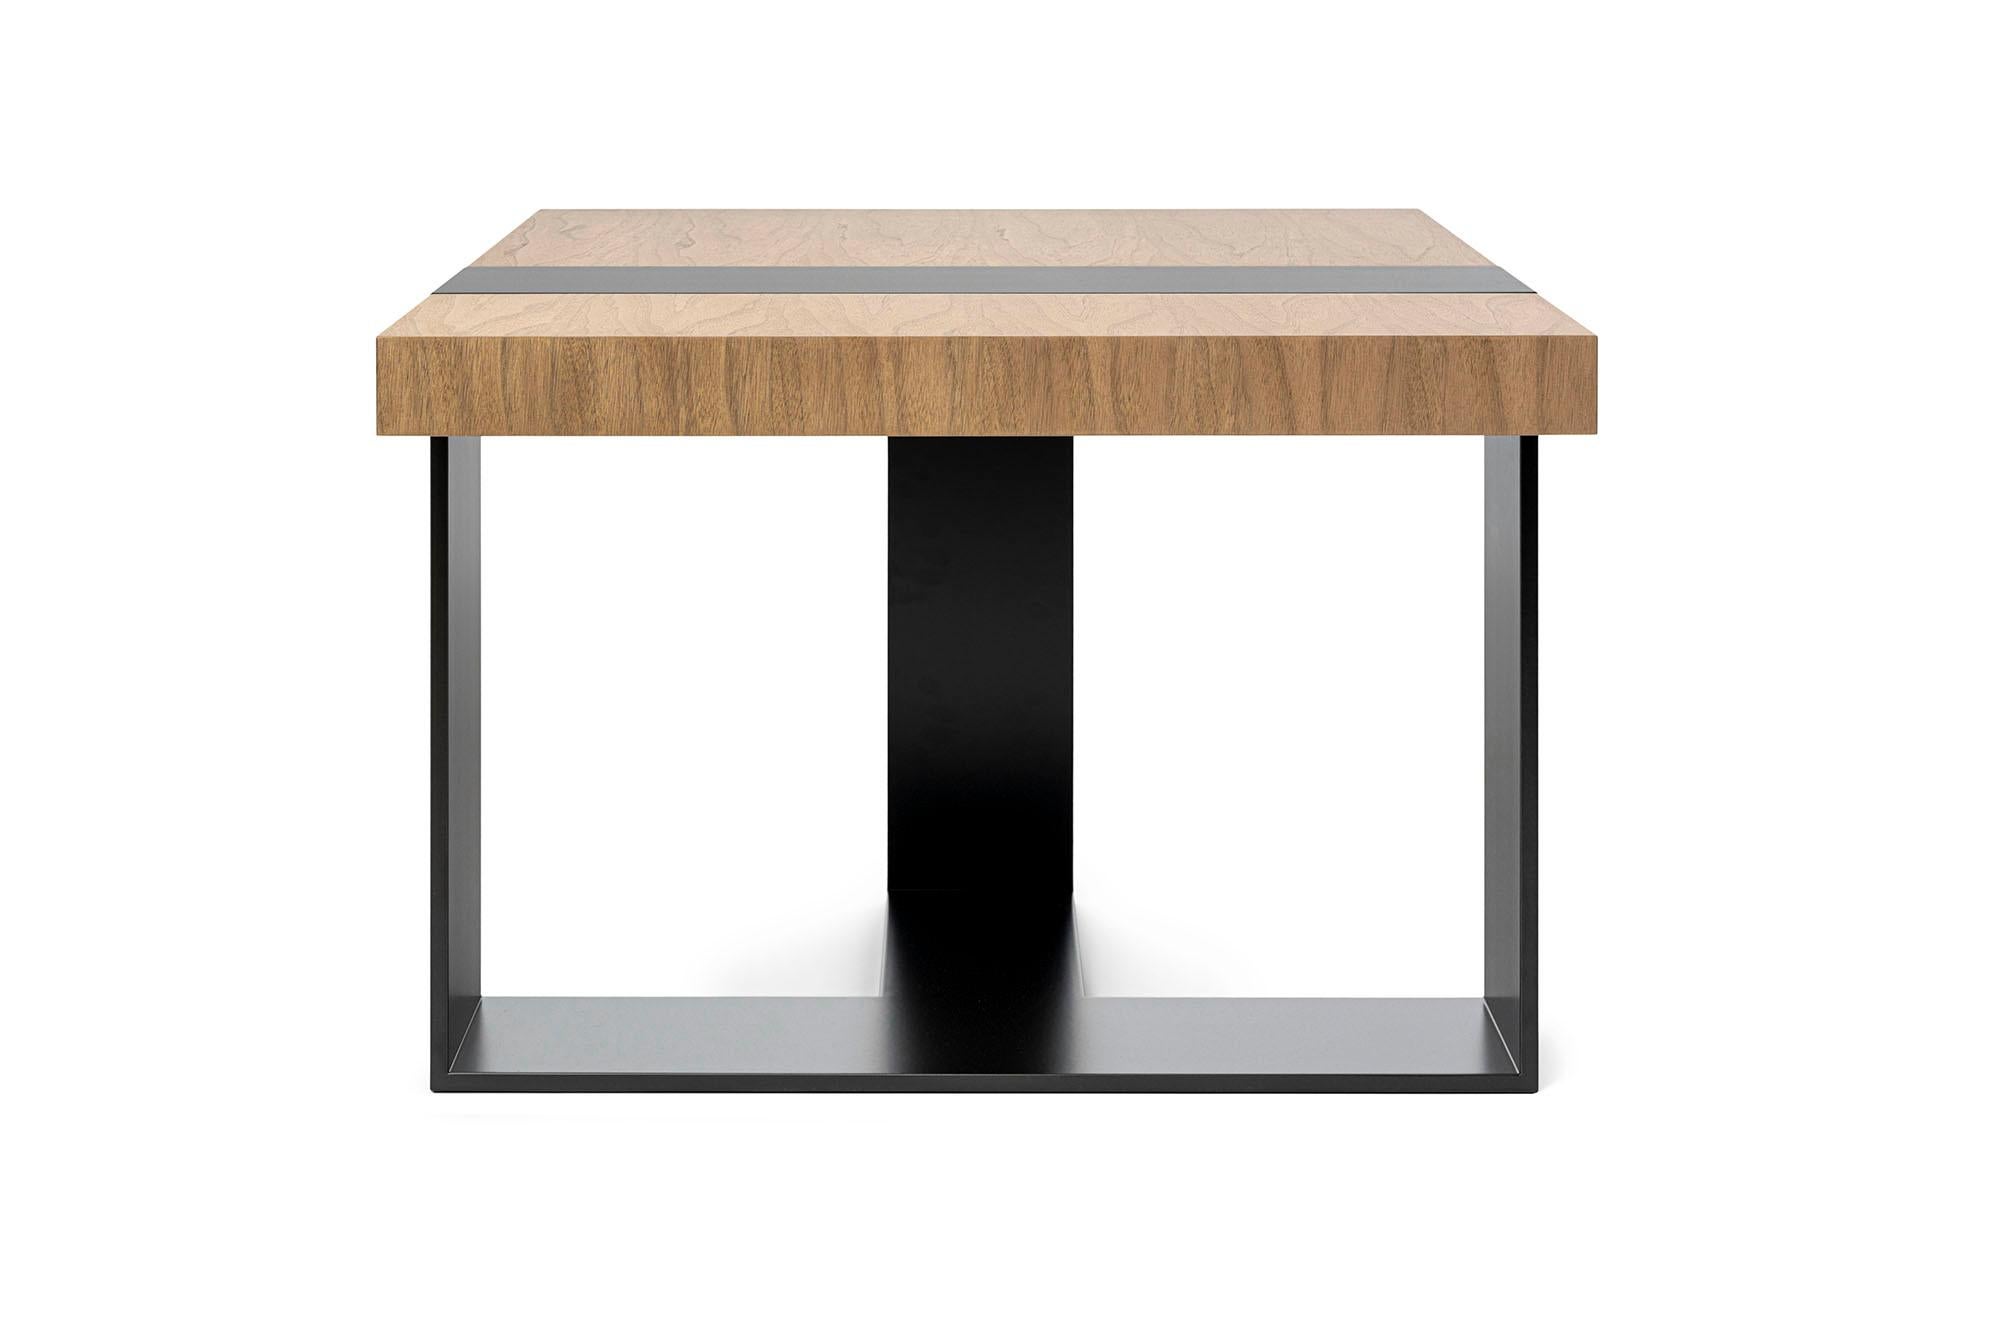 American LUMA Design Workshop Strap Side Table in Light Natural Wood and Black Metal For Sale